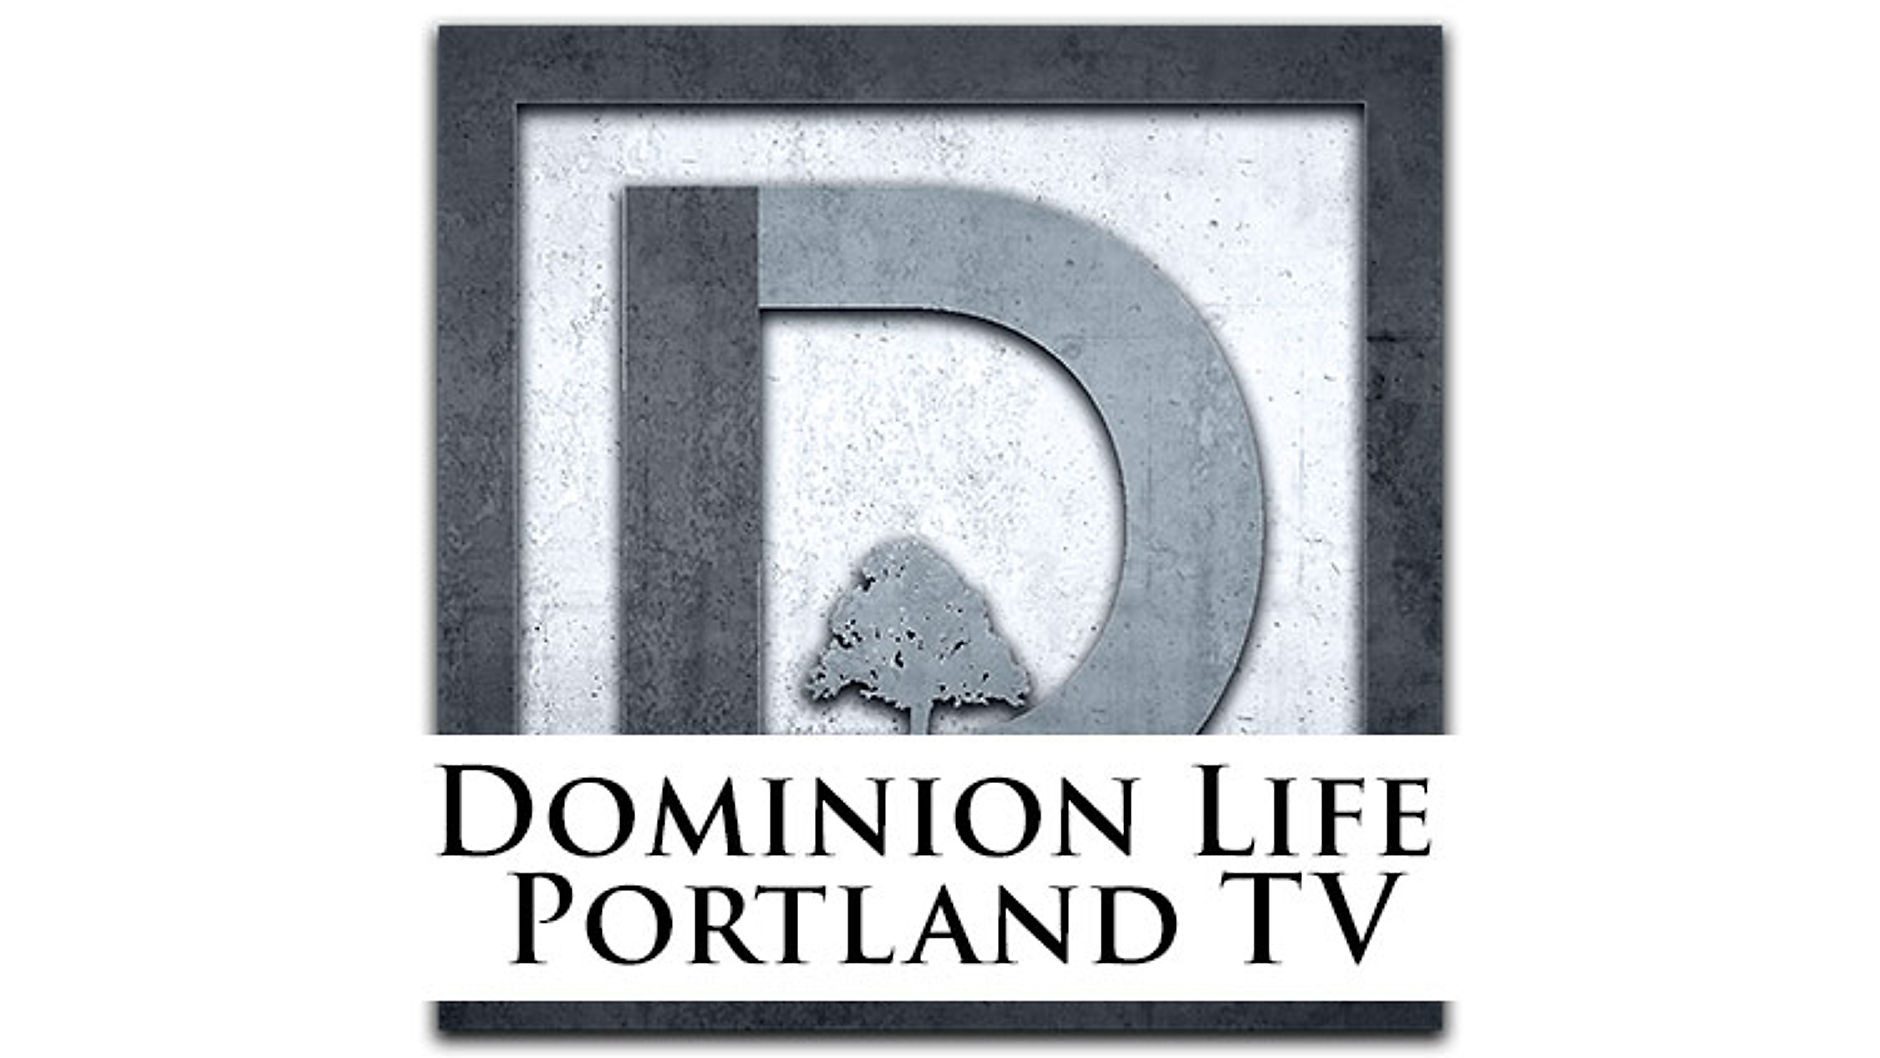 DOMINION LIFE PORTLAND TV